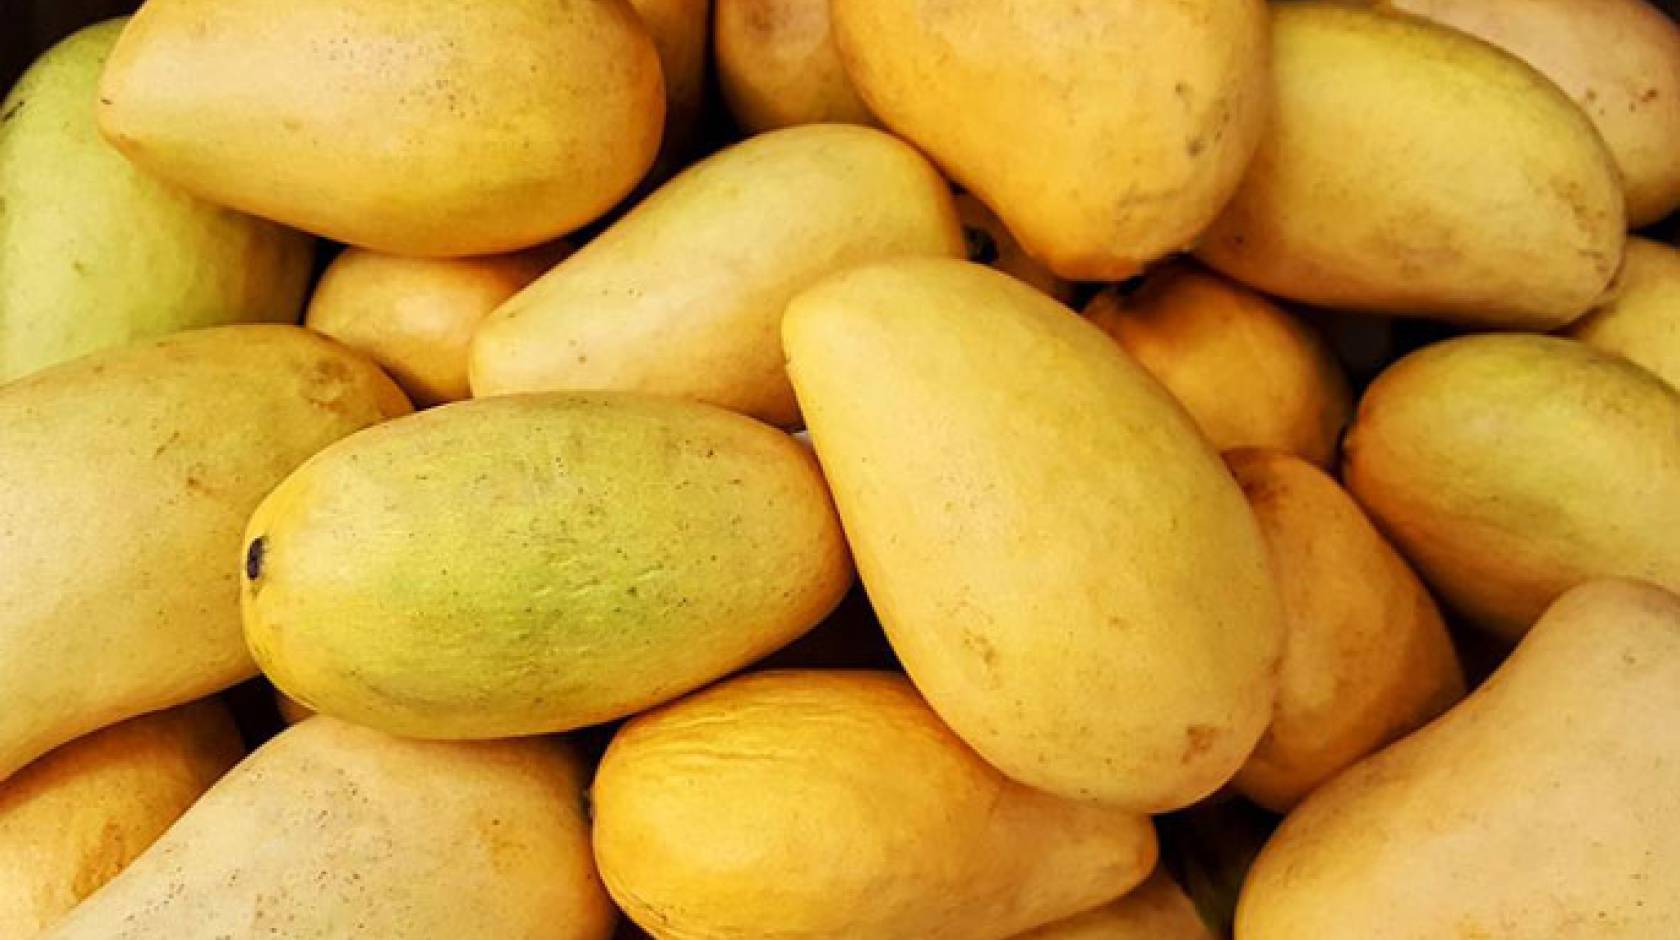 Pile of mangoes